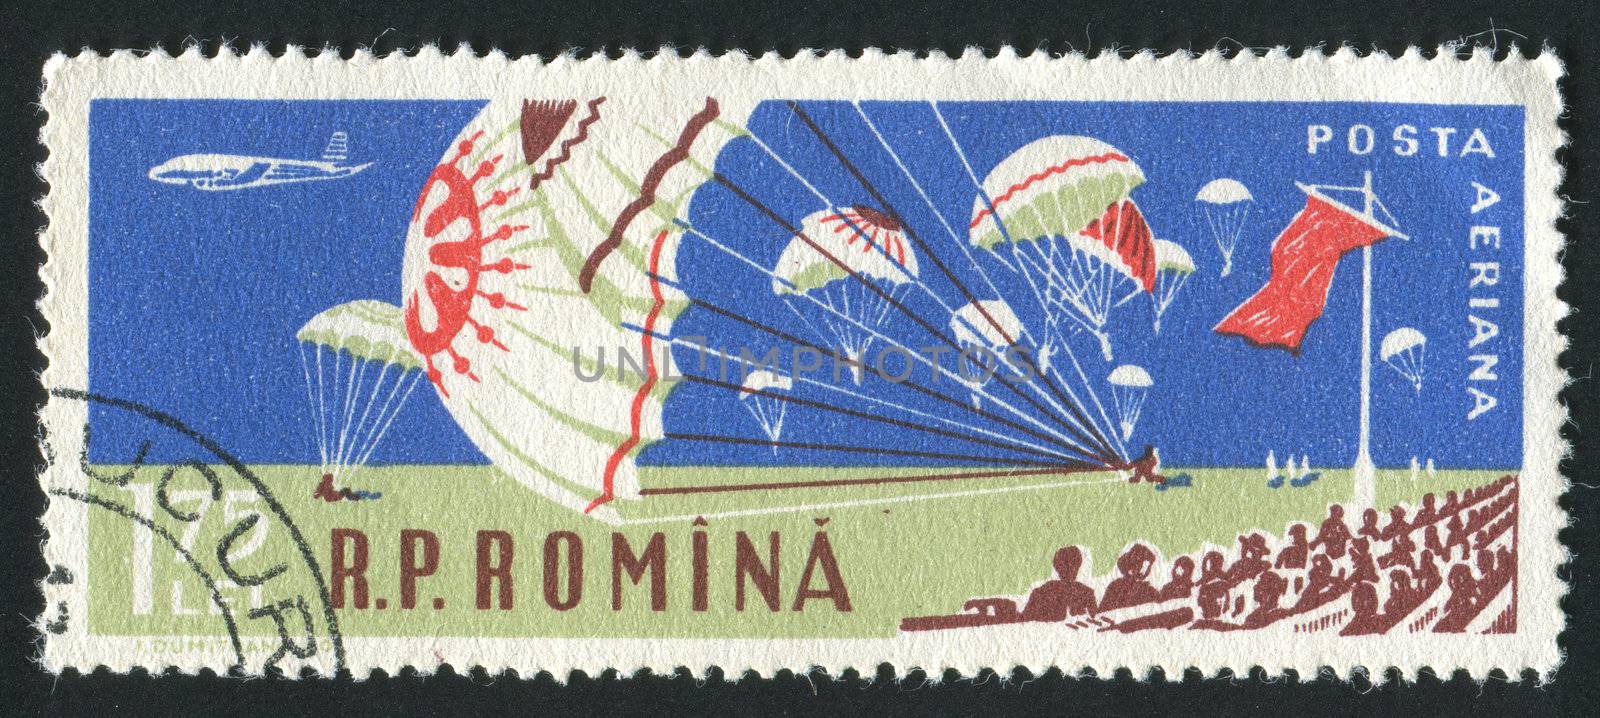 ROMANIA - CIRCA 1960: Parachutes at aviation sports meet, circa 1960.